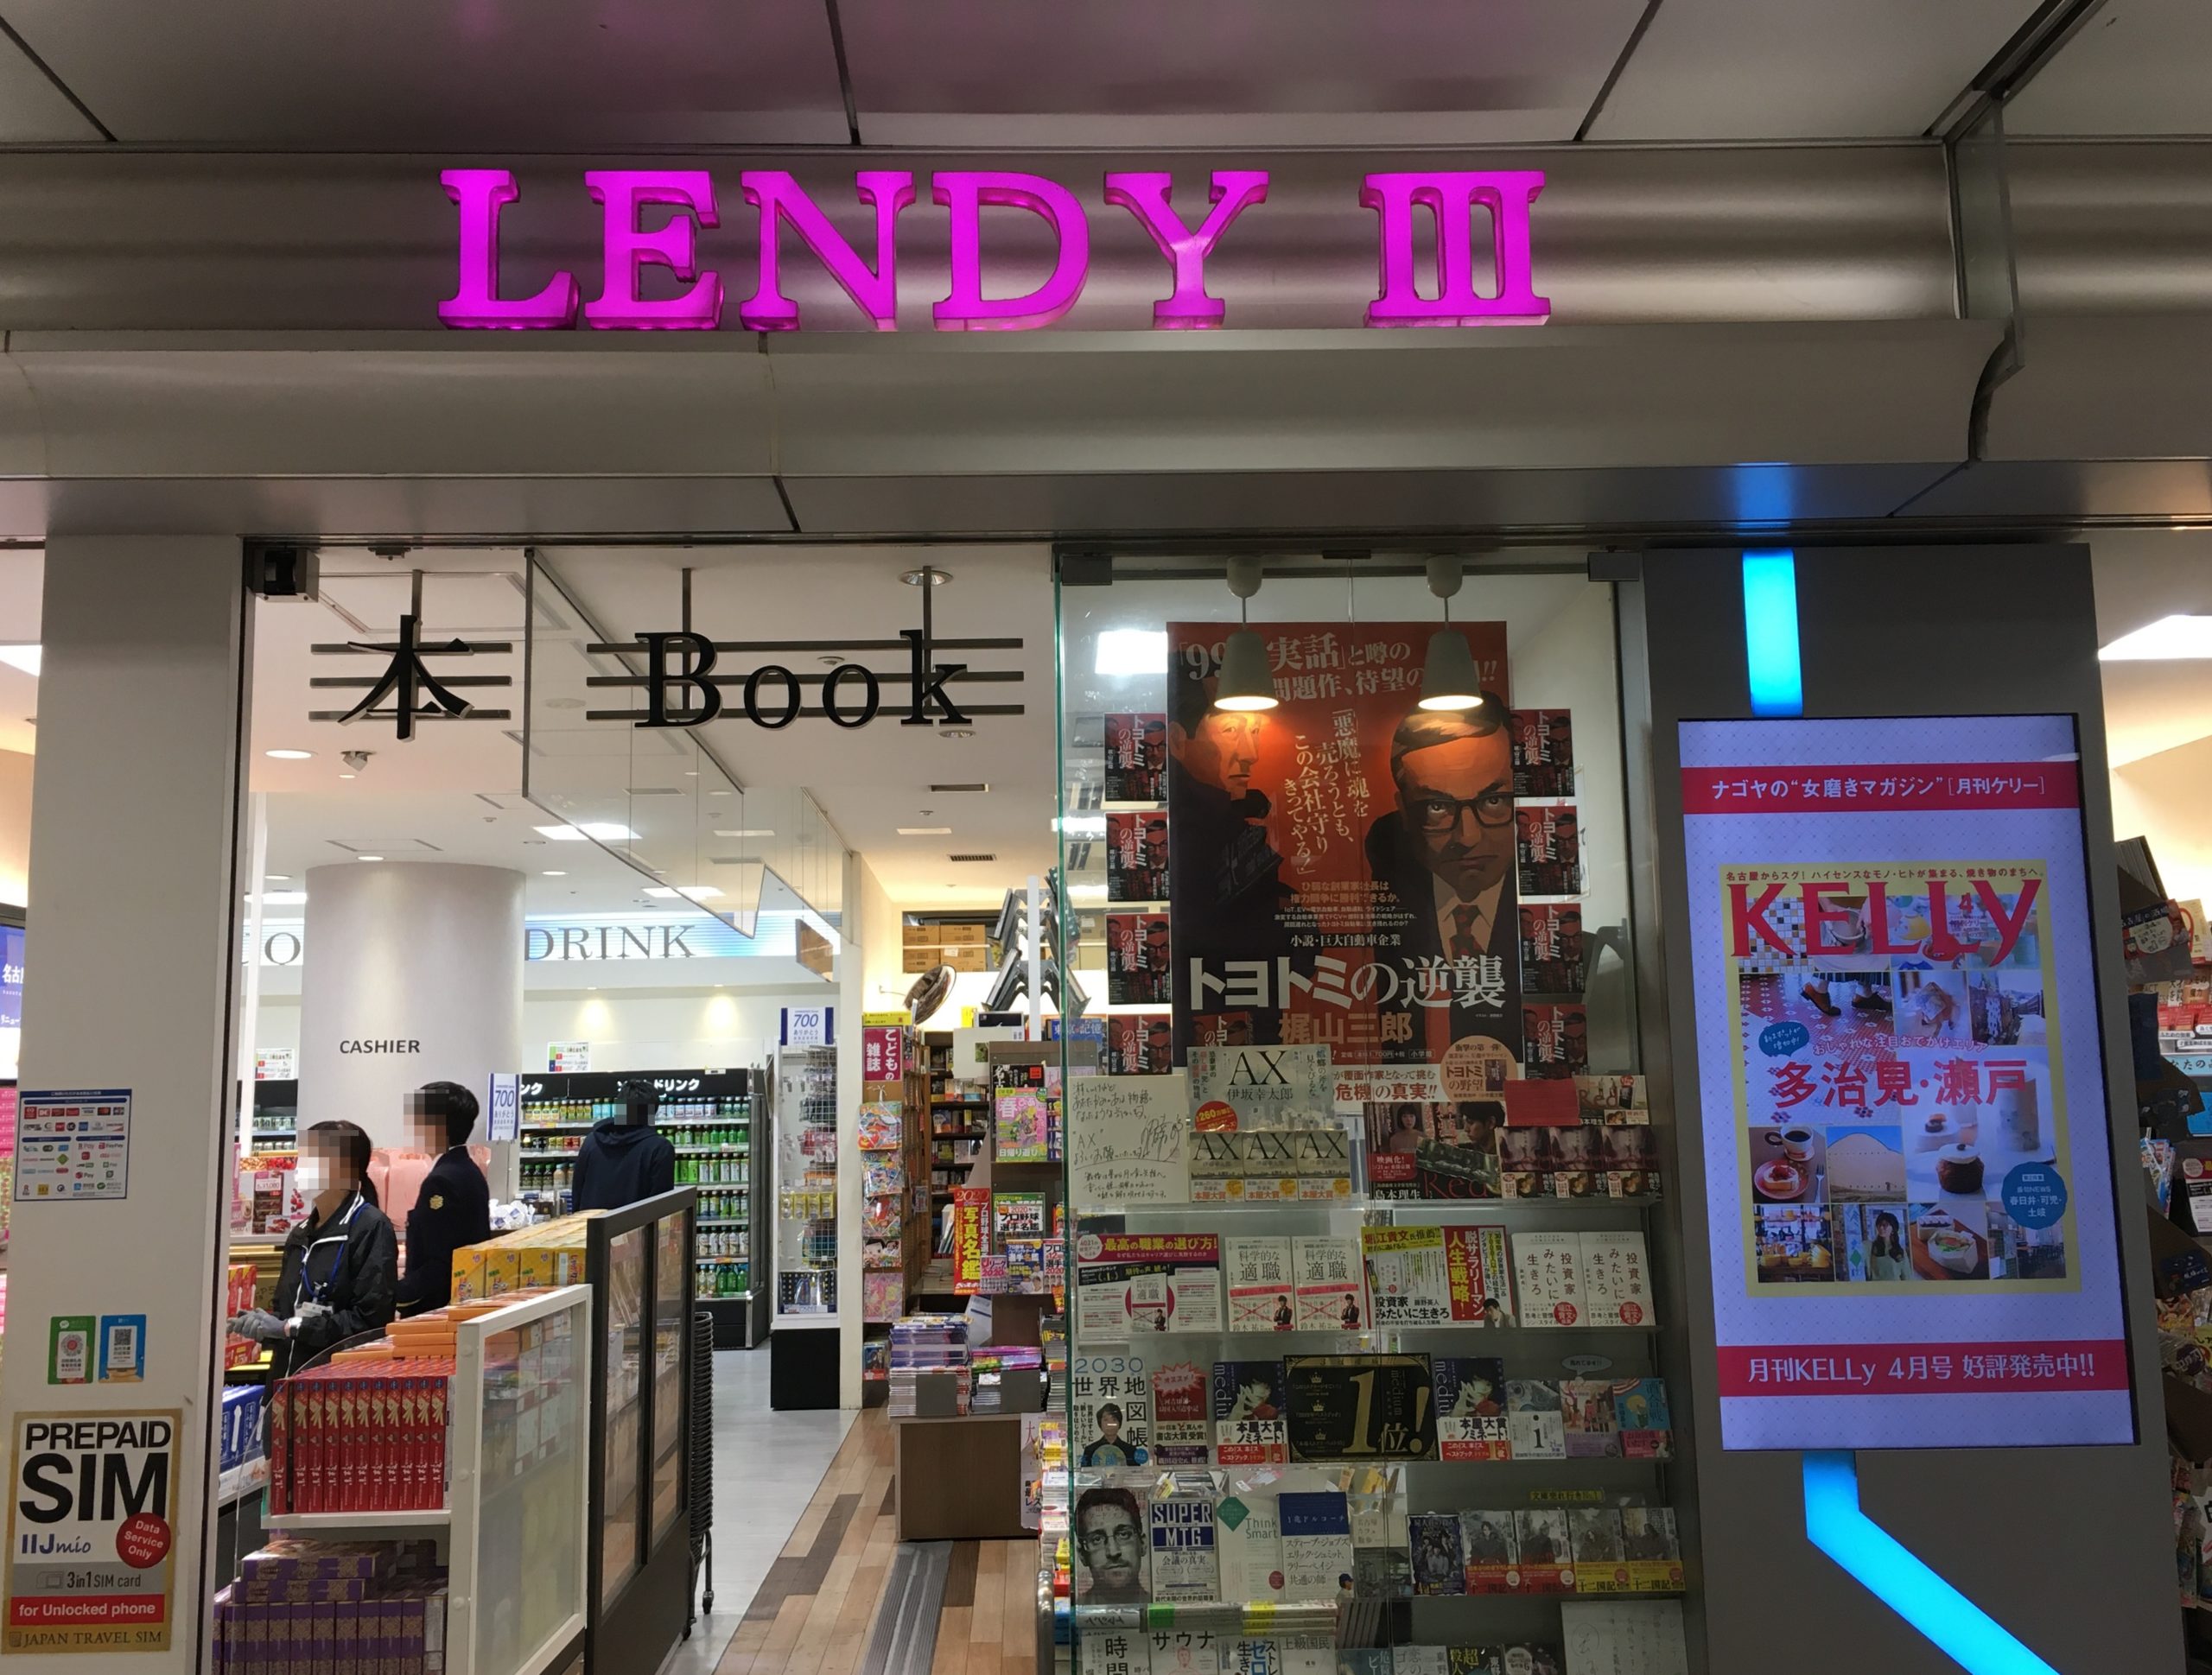 nagoya-station-bookstore